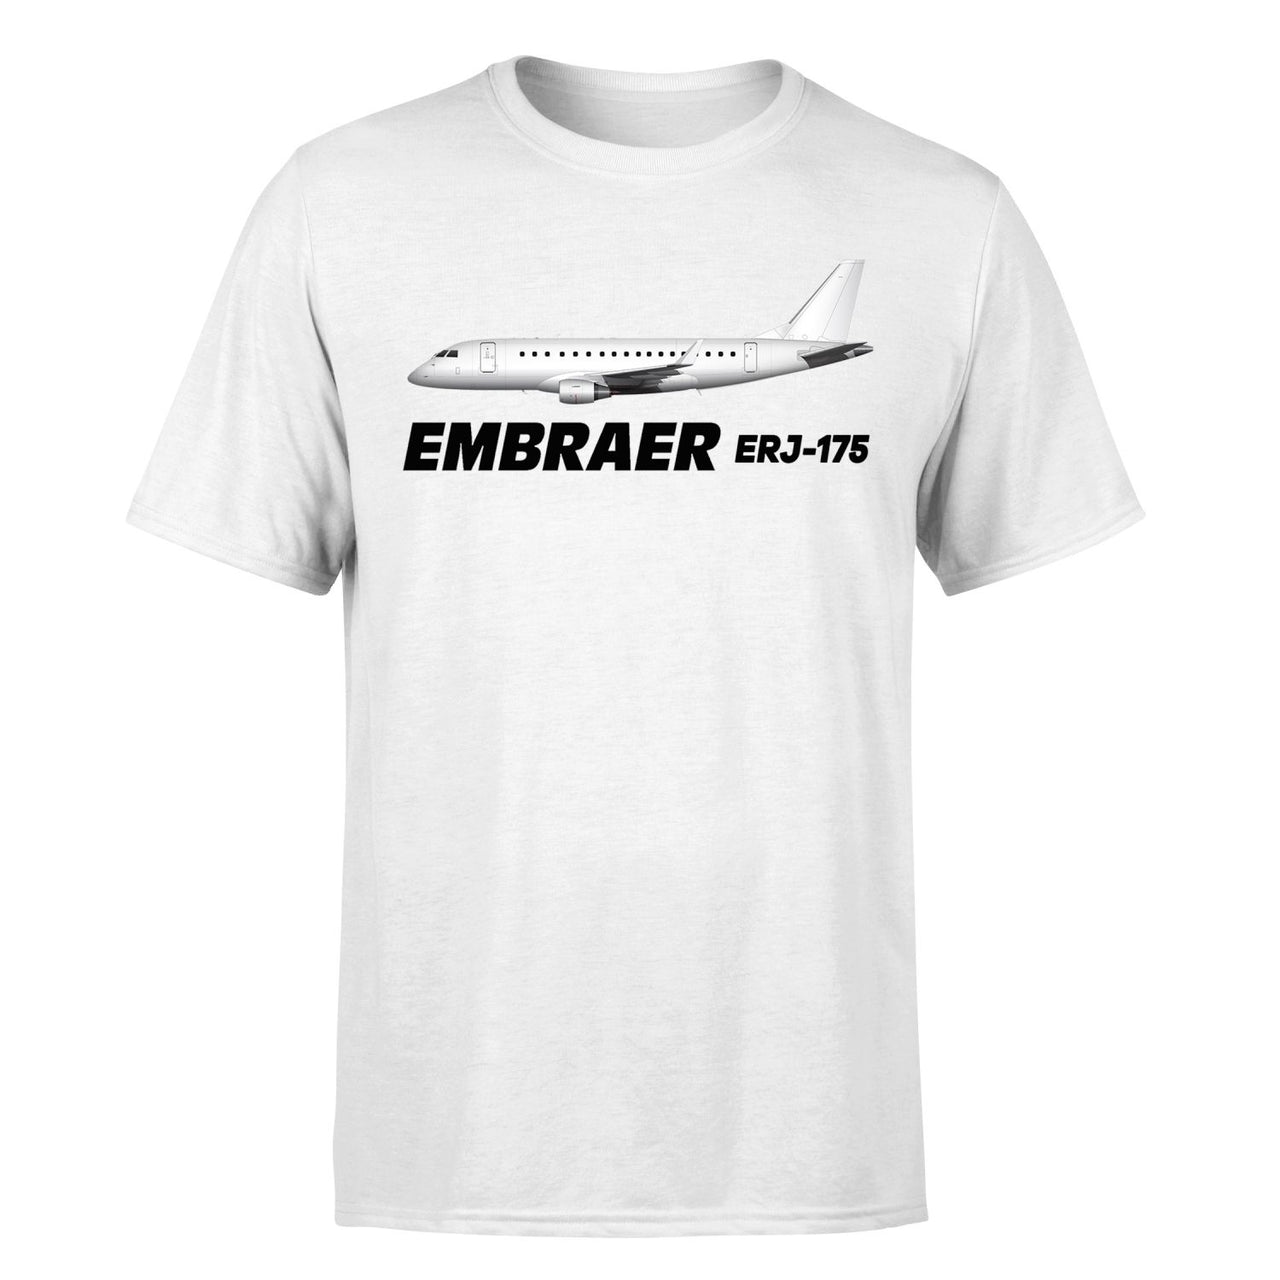 The Embraer ERJ-175 Designed T-Shirts